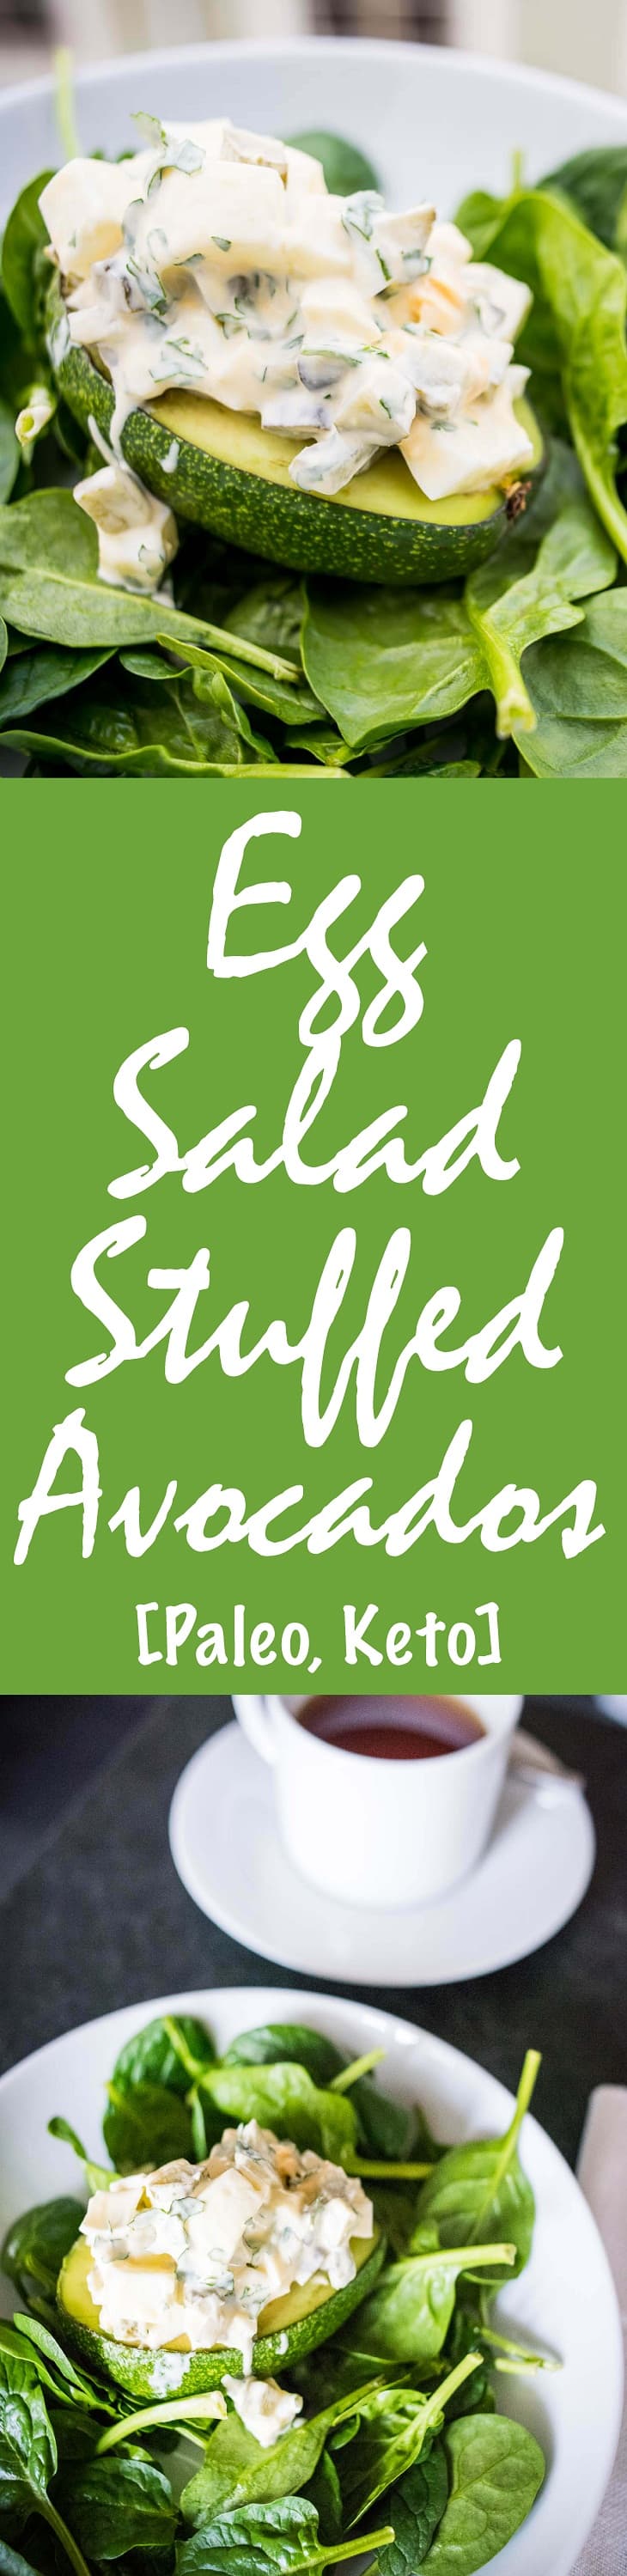 Egg Salad Stuffed Avocados [Paleo, Keto] #paleo #keto - https://paleoflourish.com/egg-salad-stuffed-avocados-paleo-keto